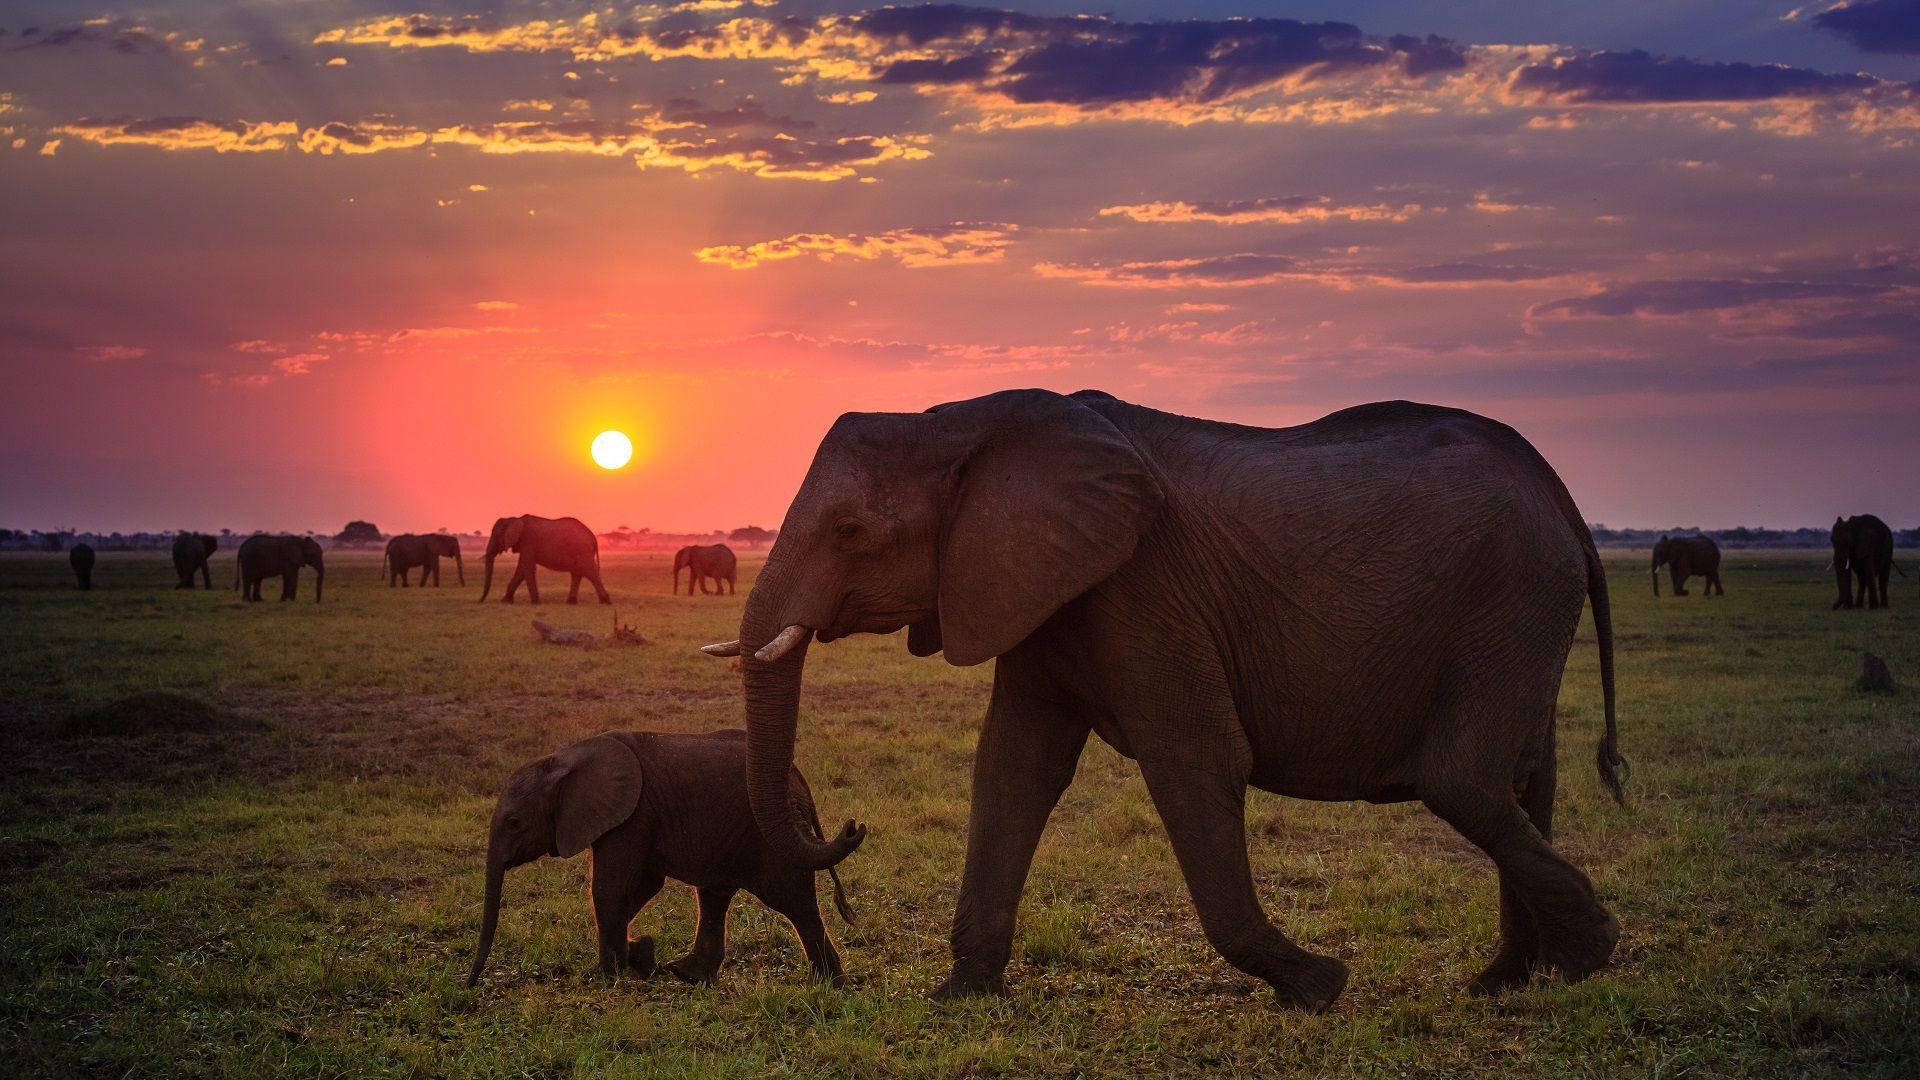 Wildlife Safari in Africa